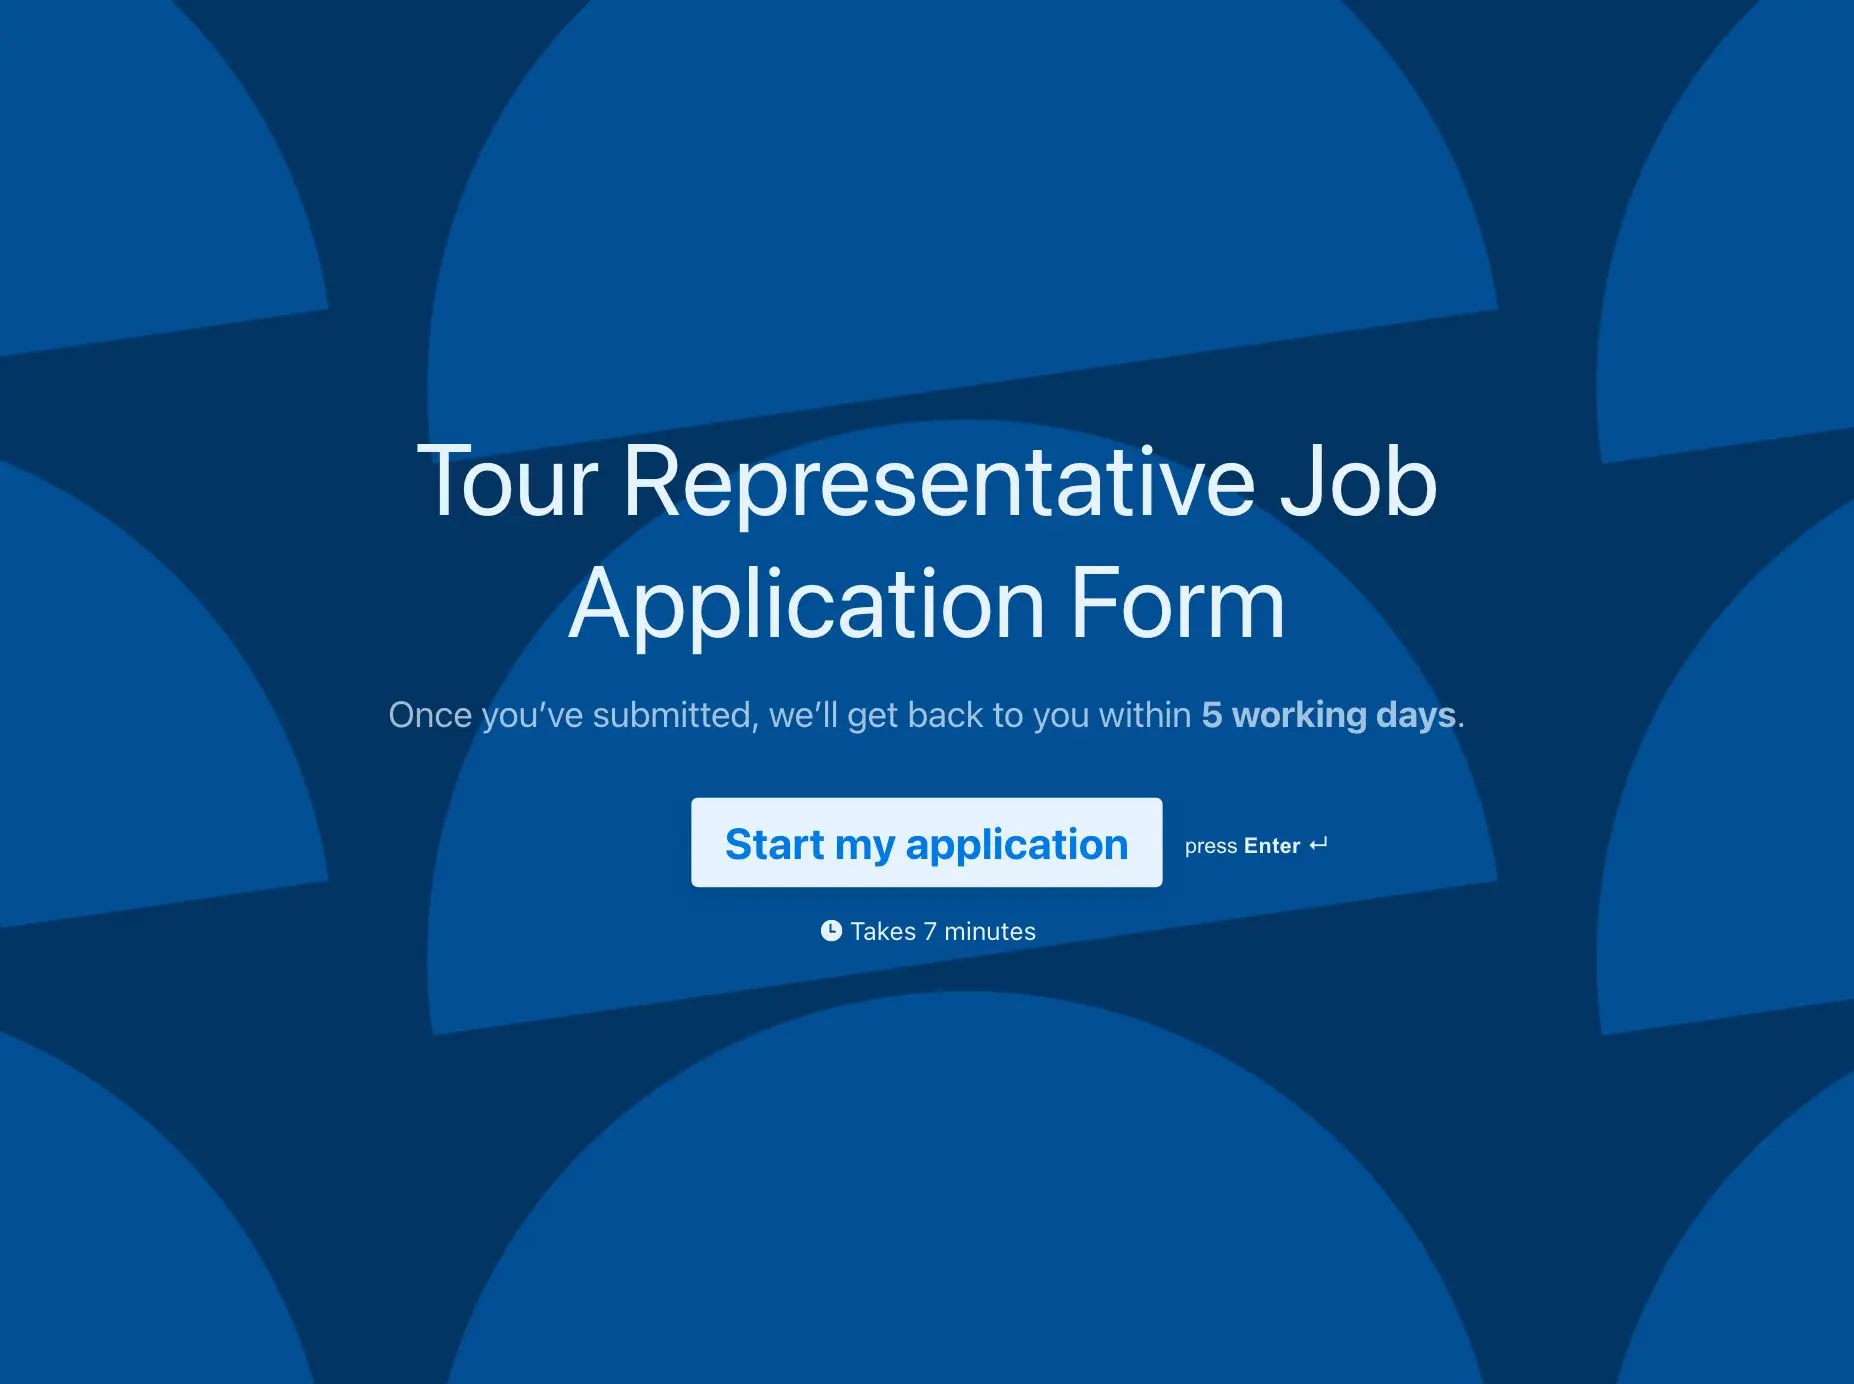 Tour Representative Job Application Form Template Hero